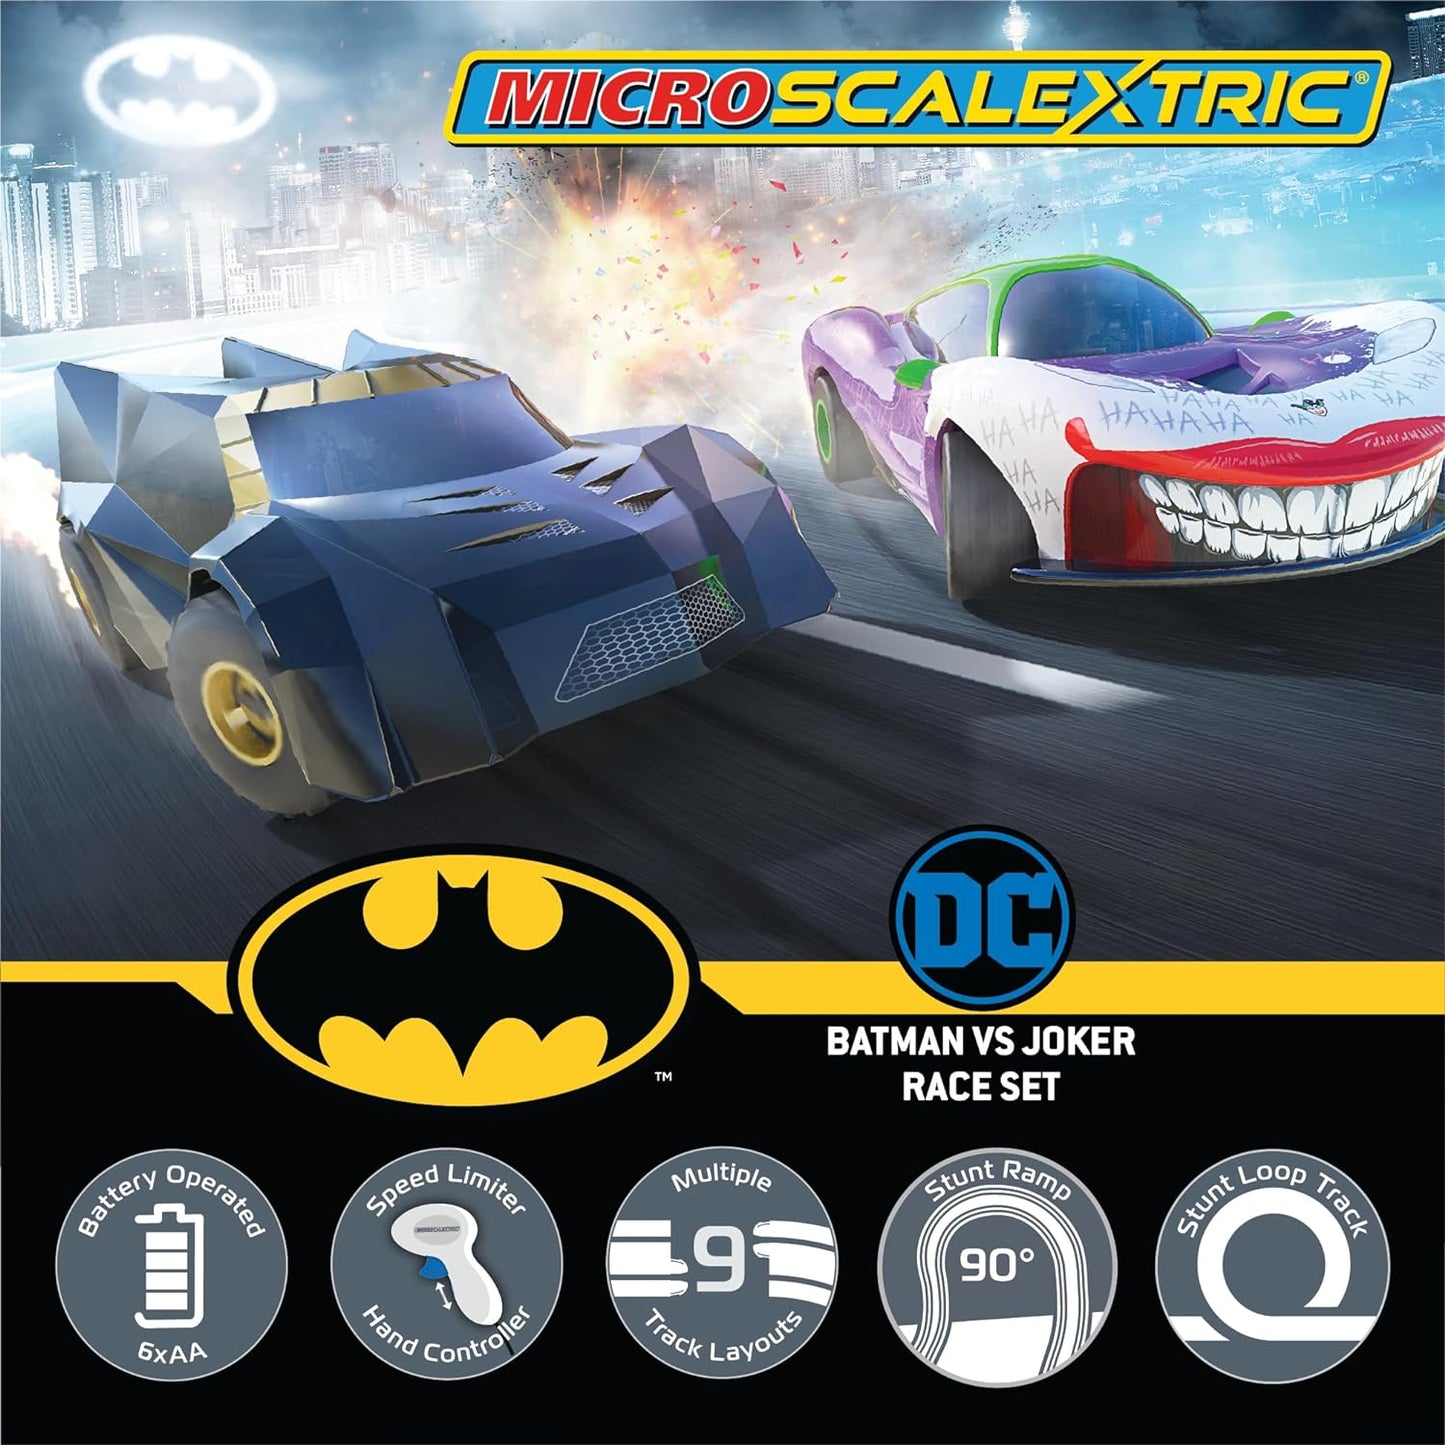 Scalextric Micro Scalextric - Conjunto Batman vs Joker - Conjuntos de corrida movidos a bateria, pistas de corrida de Slot Car para crianças de 4 anos ou mais, inclui 2 carros, 1 pista, 1 base de bateria, 2 controladores e gráfico de pista